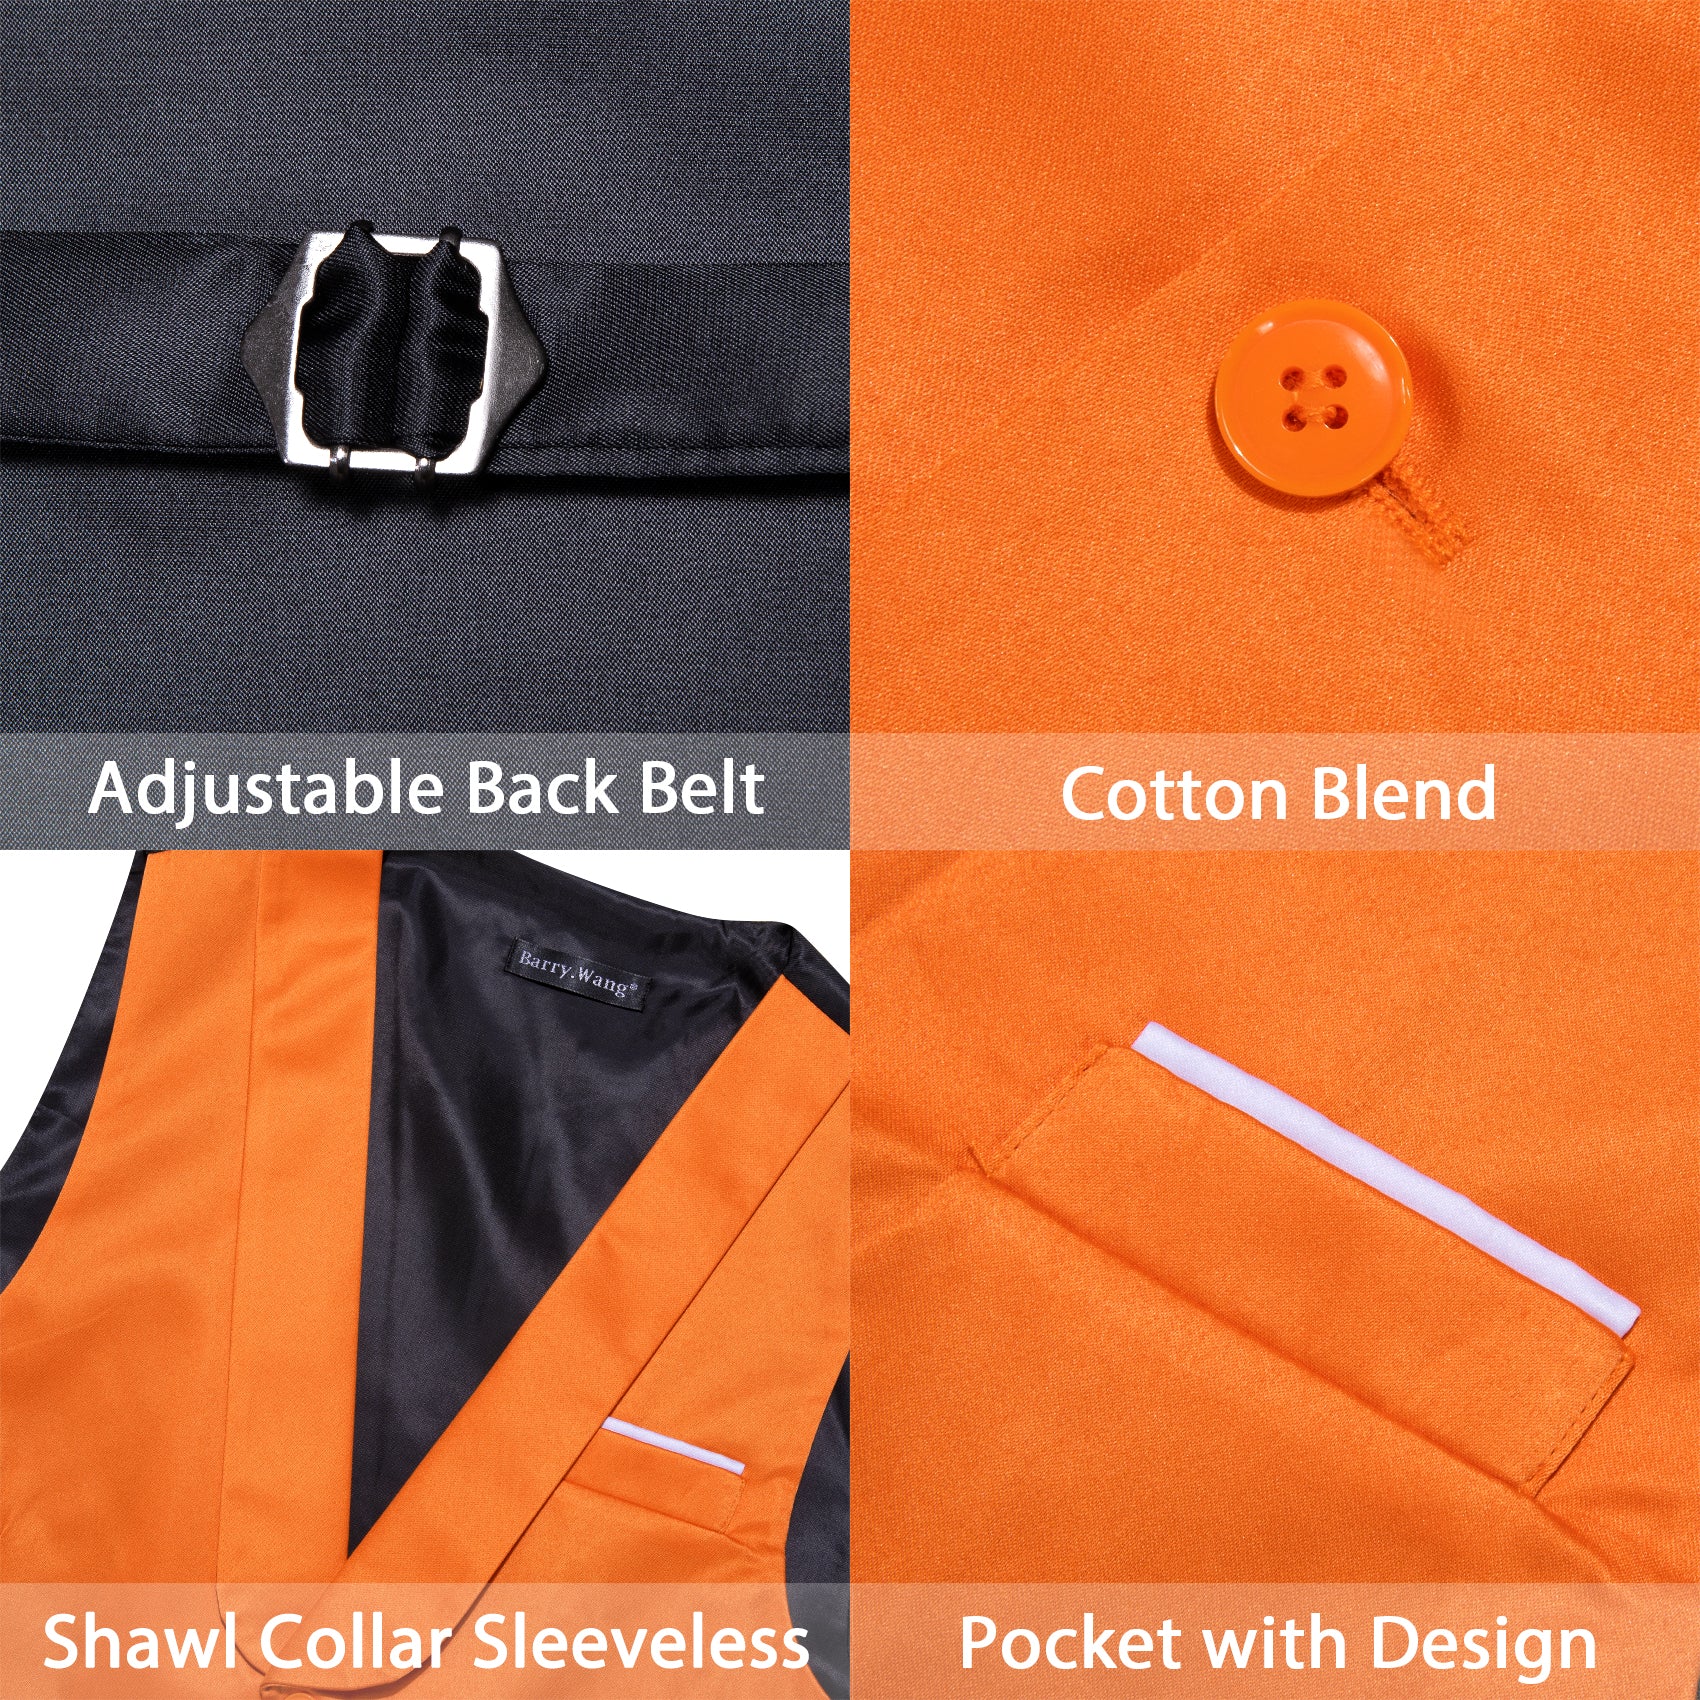 Barry.wang Men's Vest Orange Solid Shawl Collar Vest Waistcoat Set